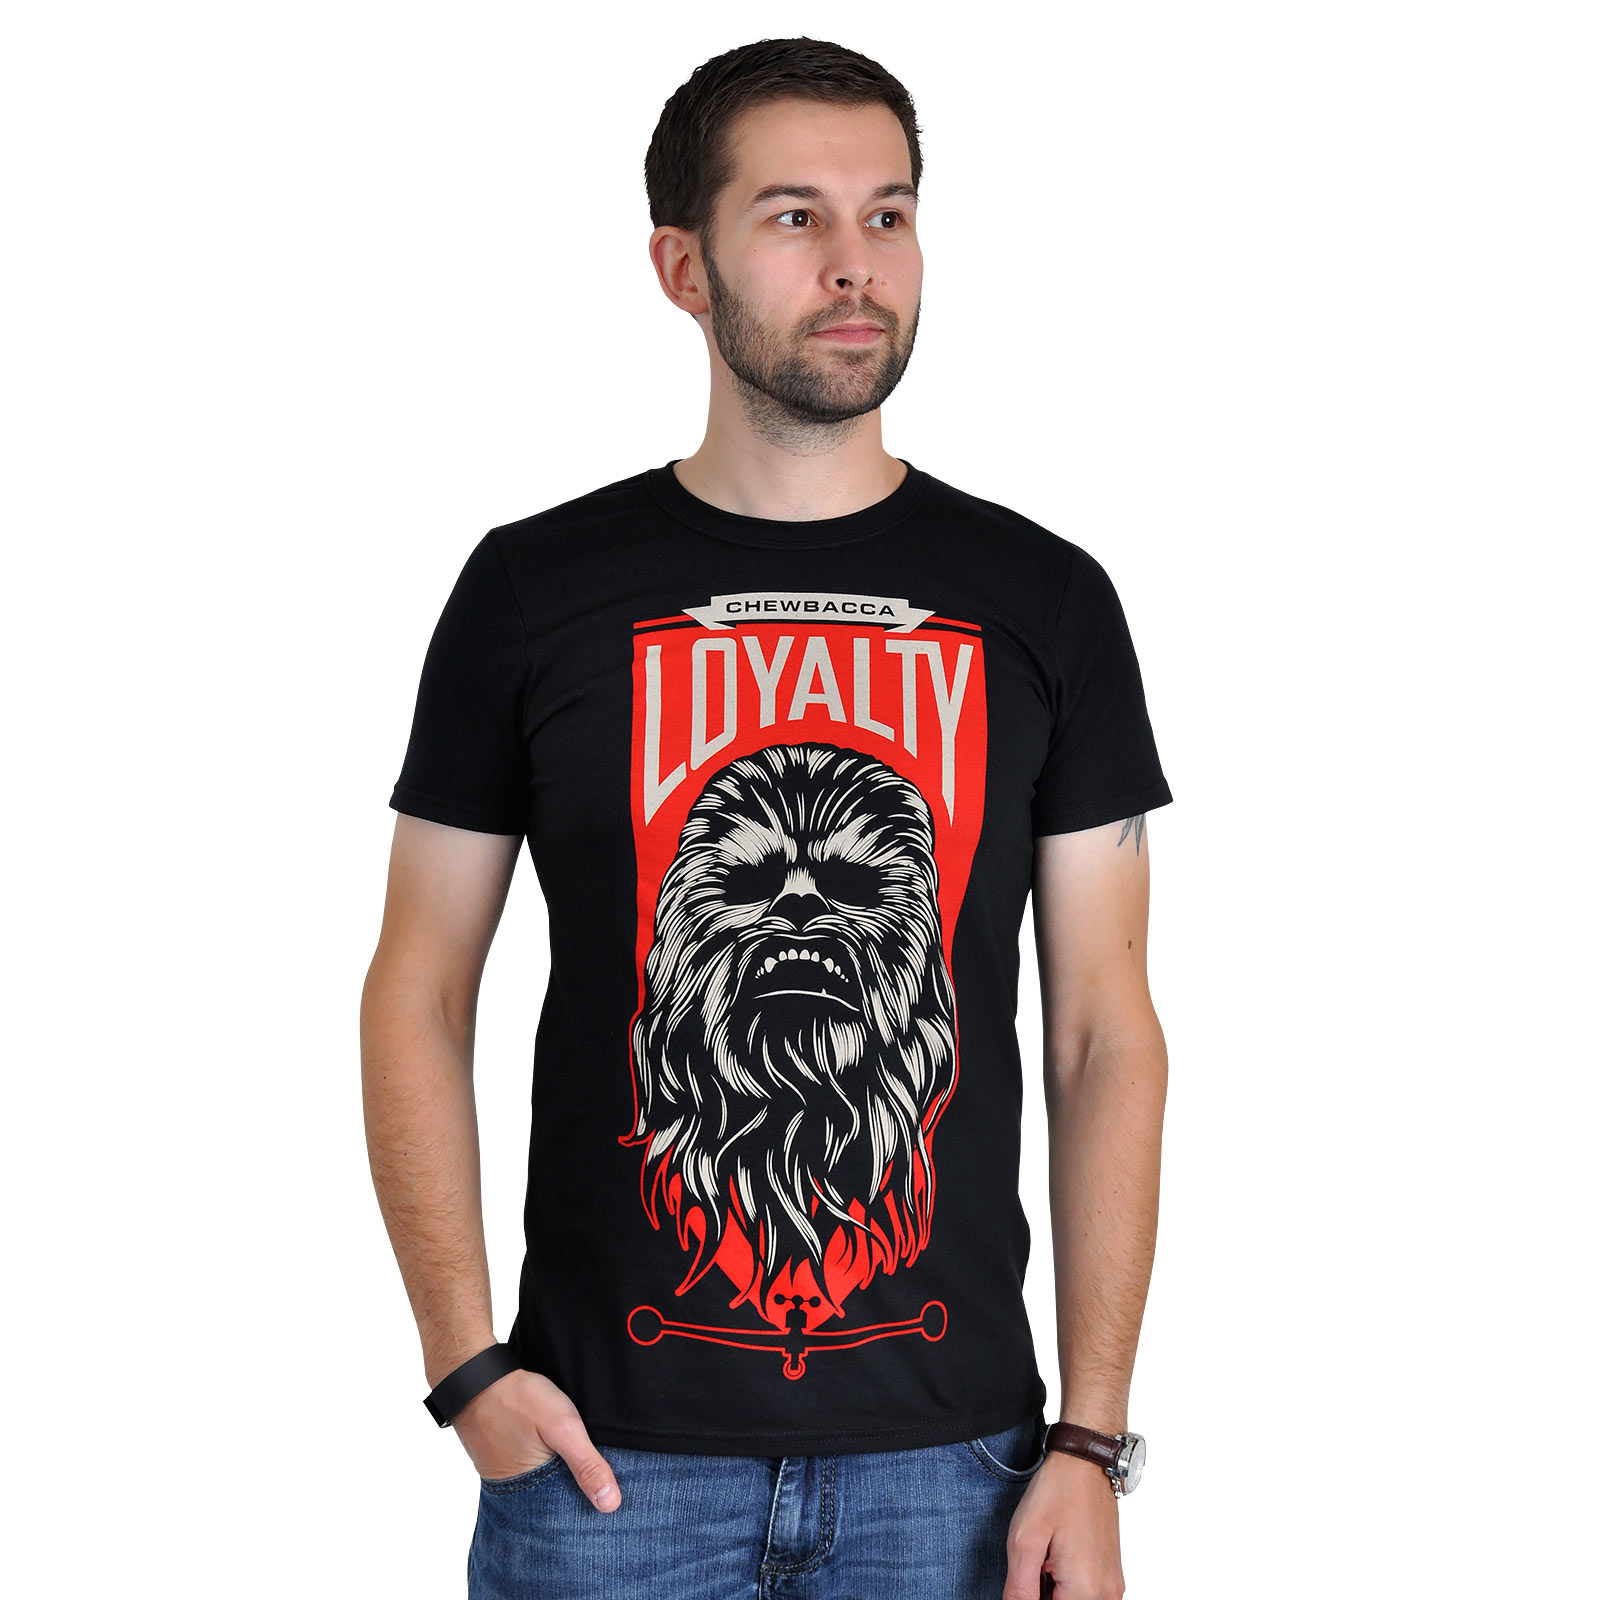 Star Wars - T-shirt noir Chewbacca Loyalty